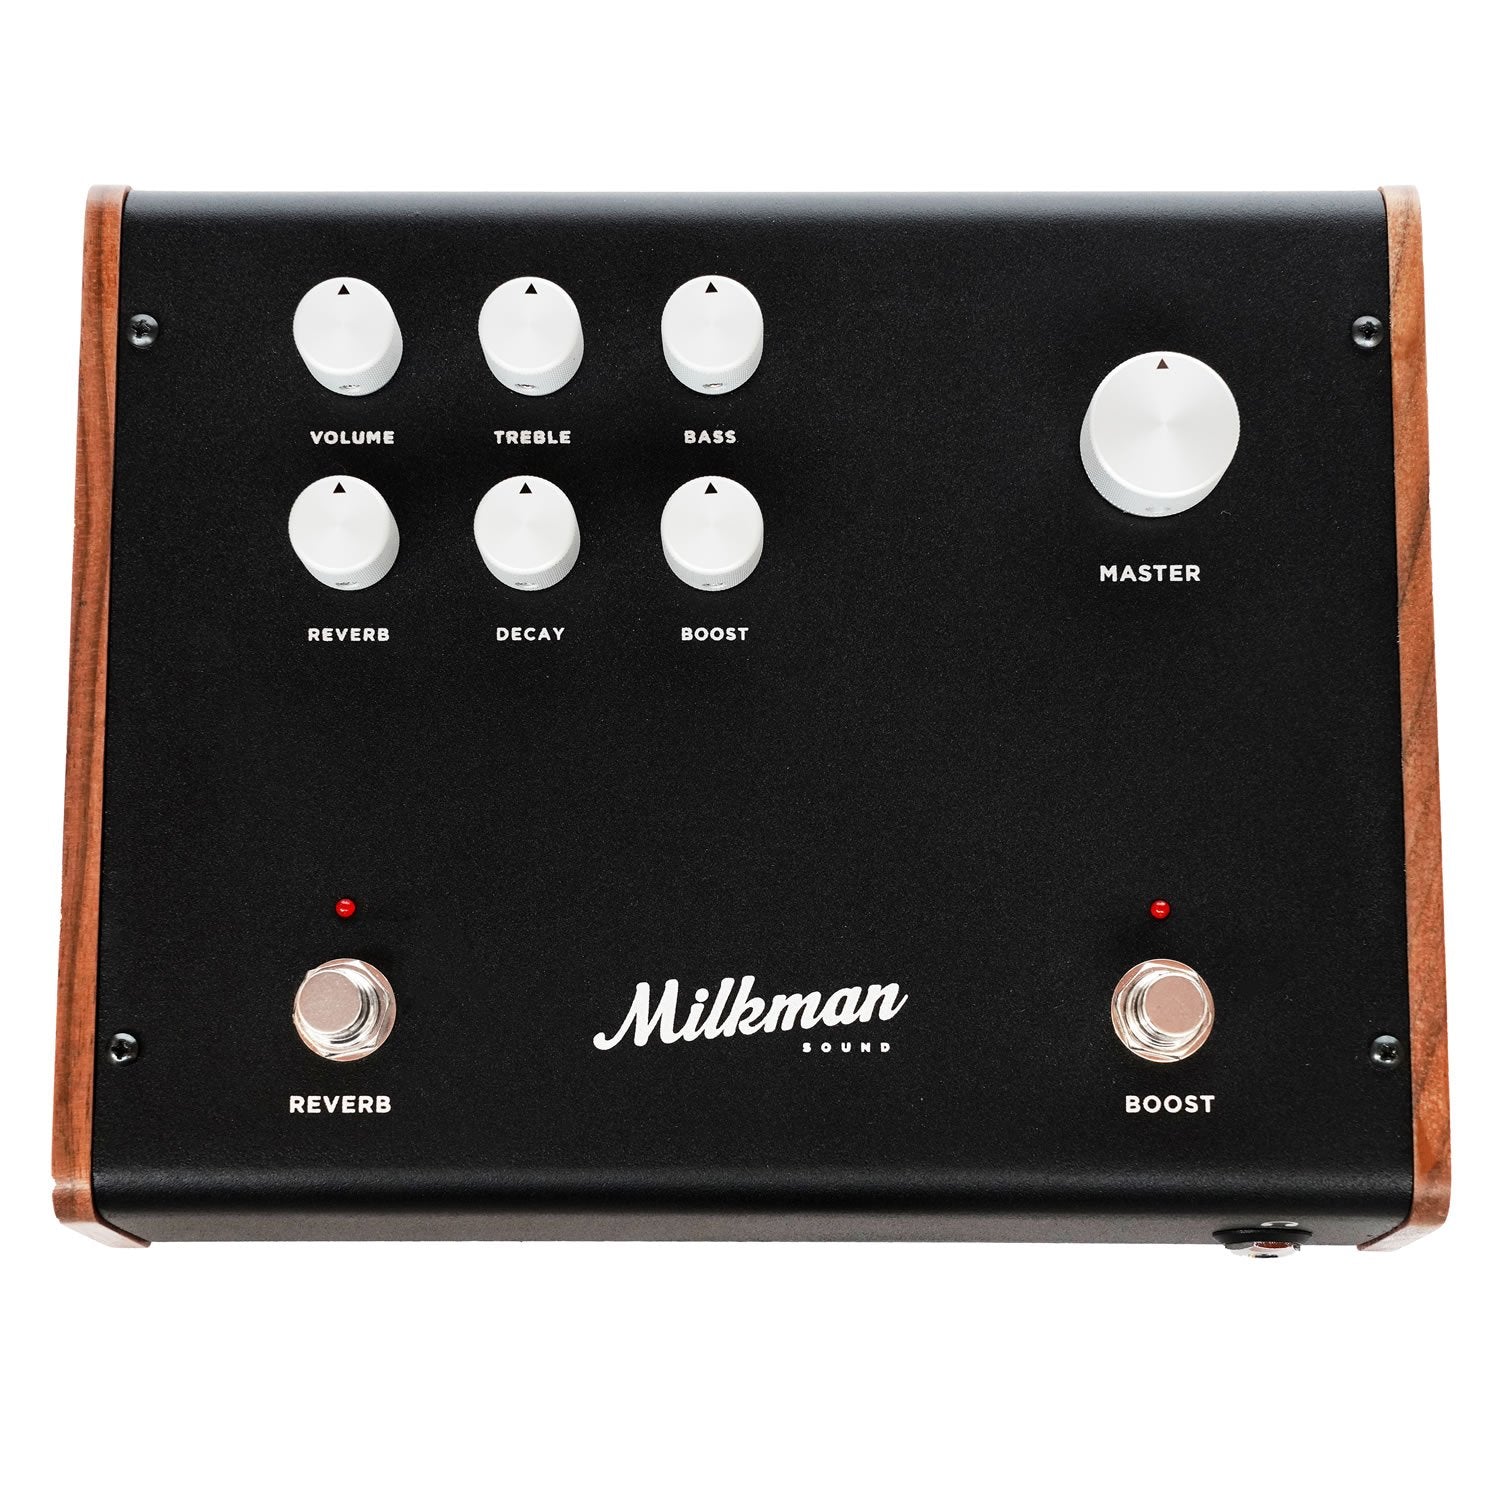 Milkman Sound The Amp - 100W Guitar Amplifier